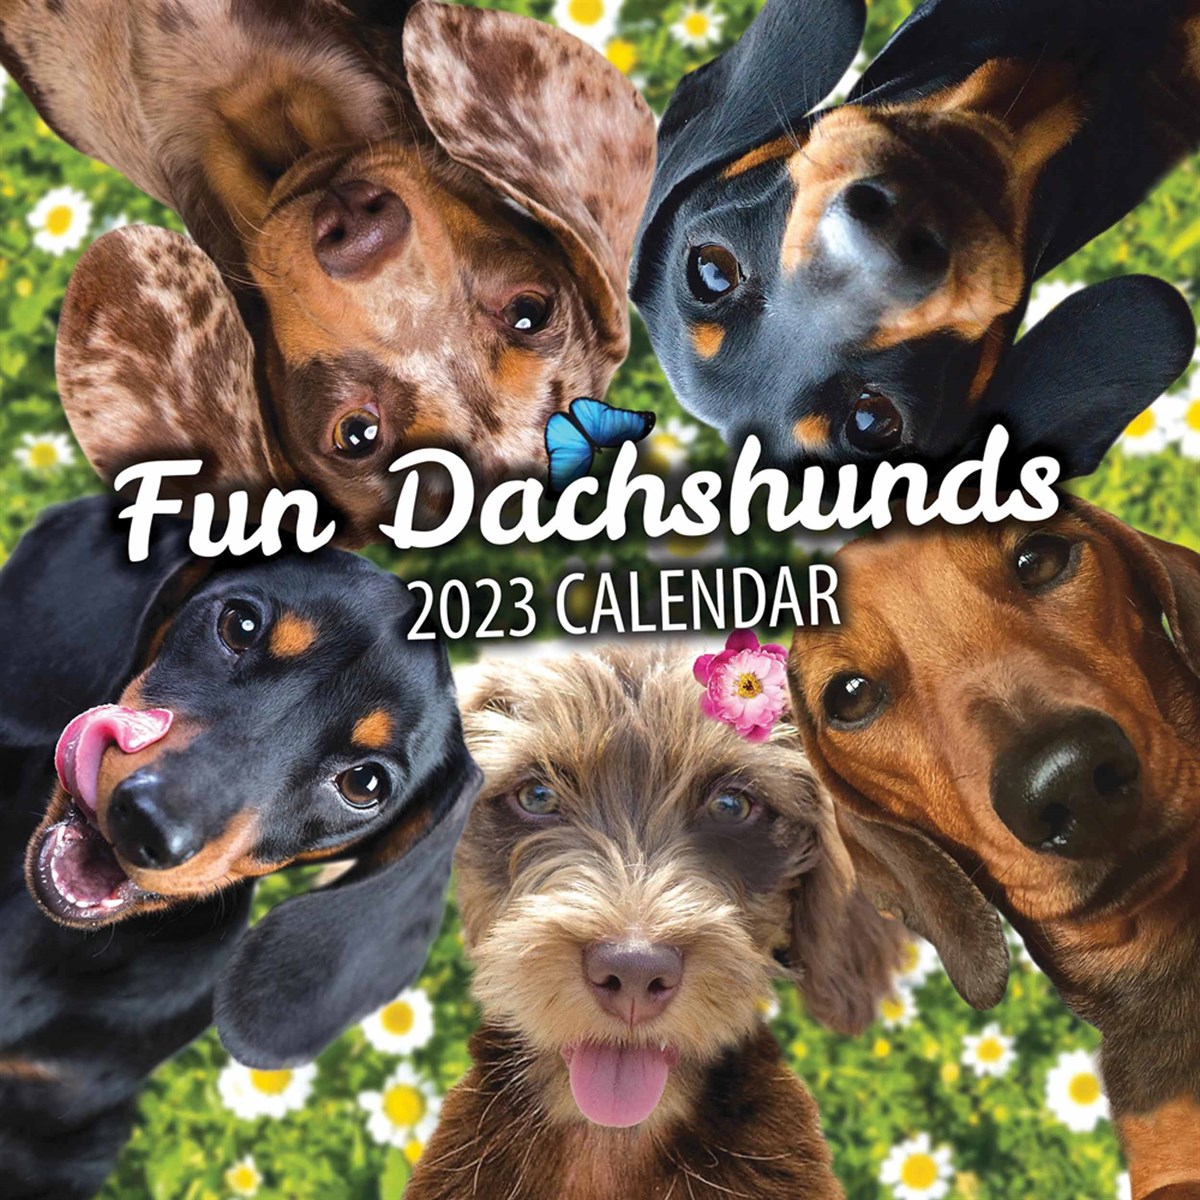 Fun Dachshunds 2023 Calendars